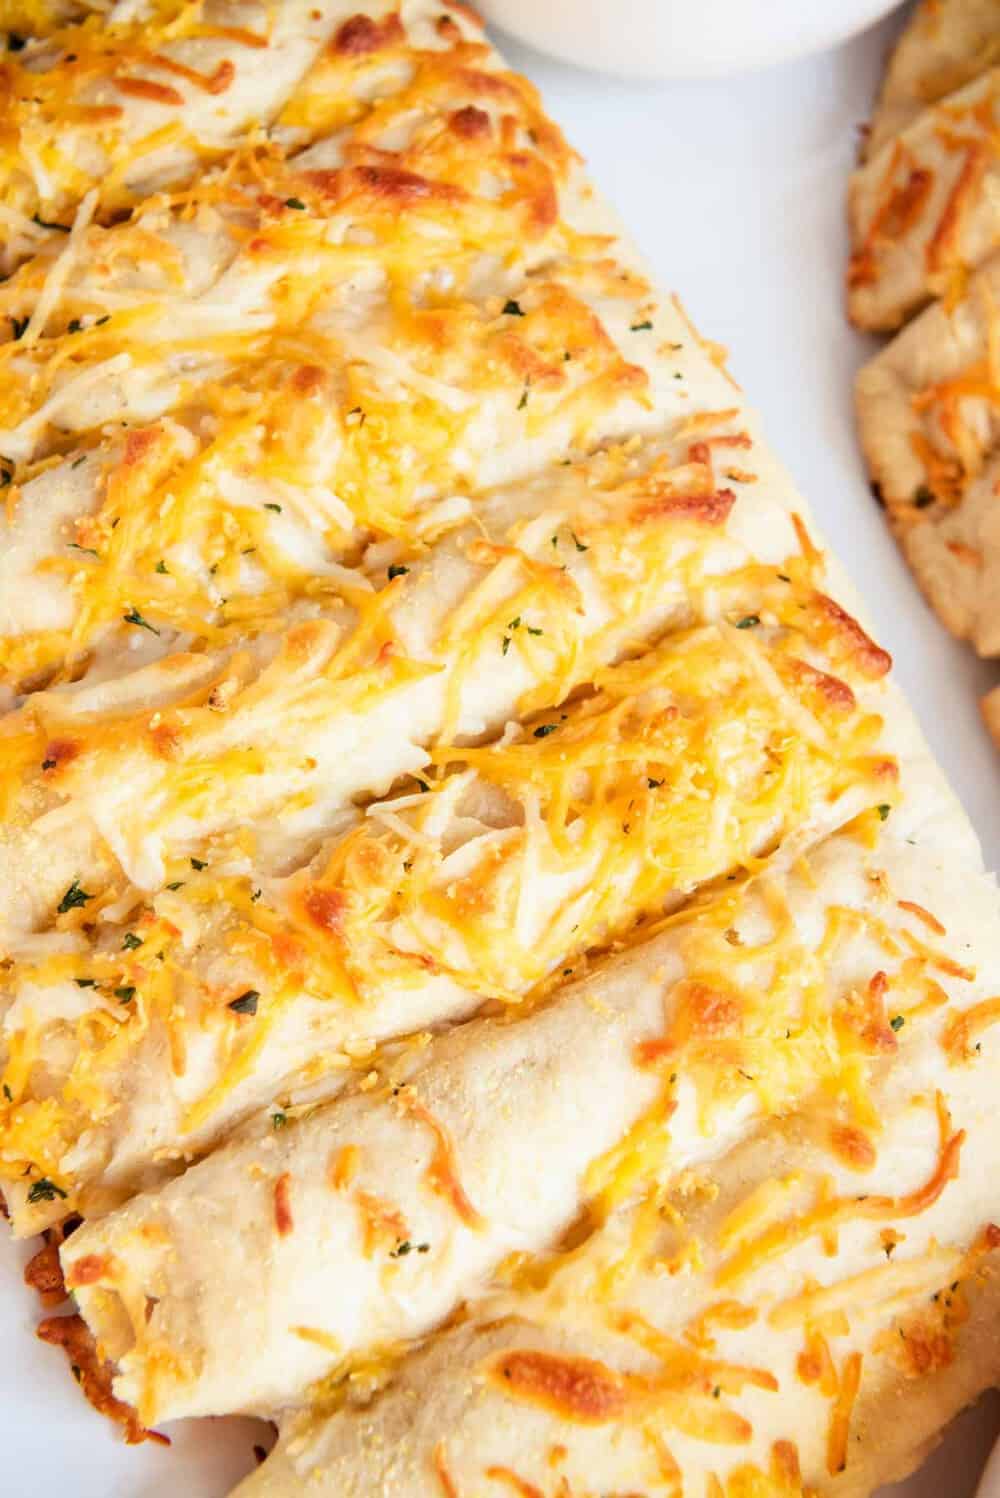 Cheesy garlic bread slices.